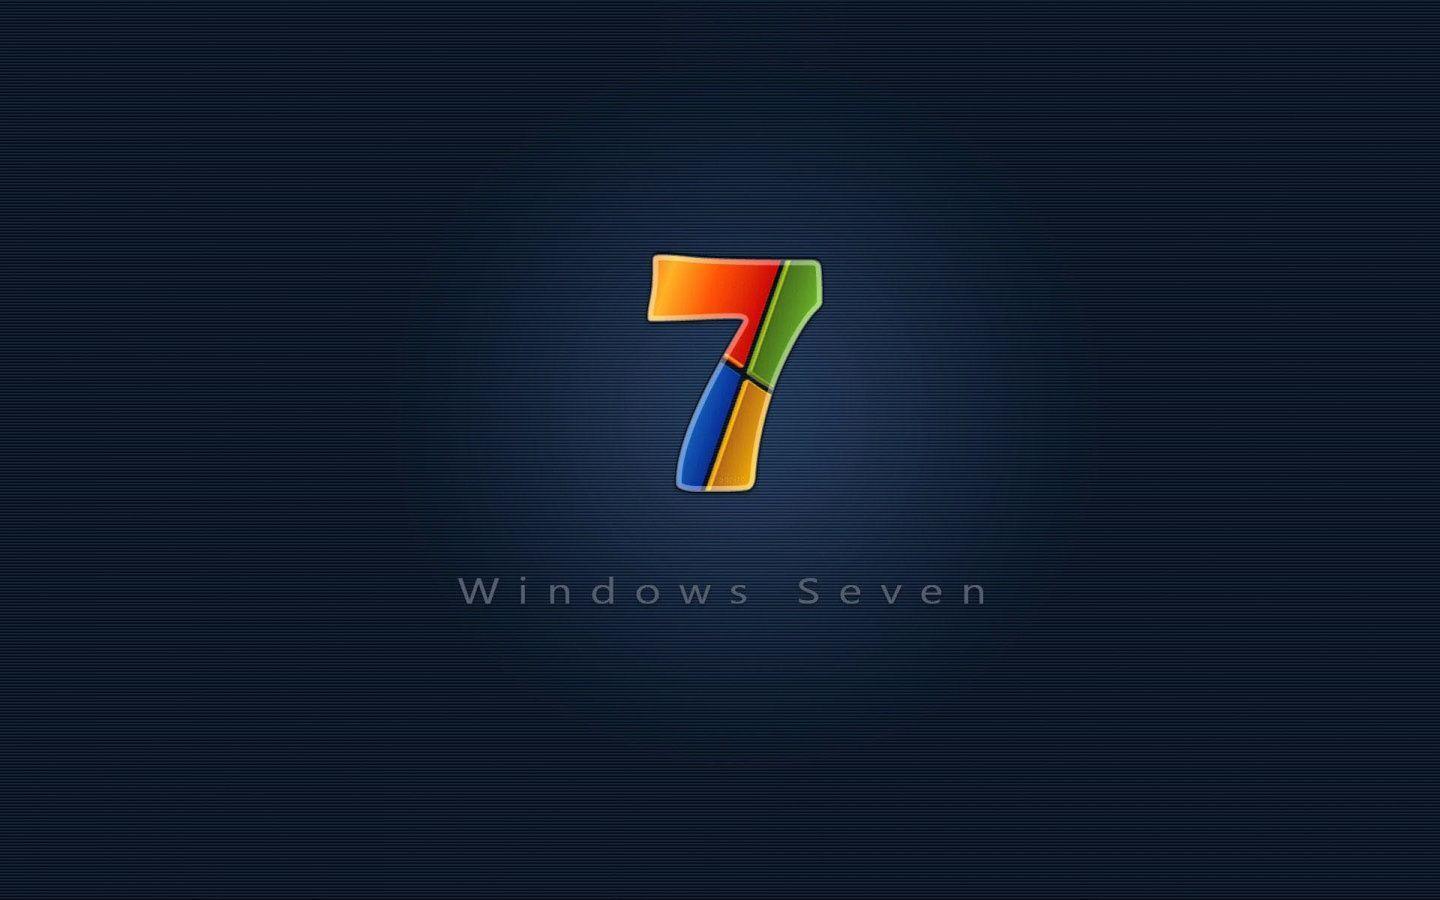 Windows 7 Wallpapers Free Download For Desktop Wallpapers